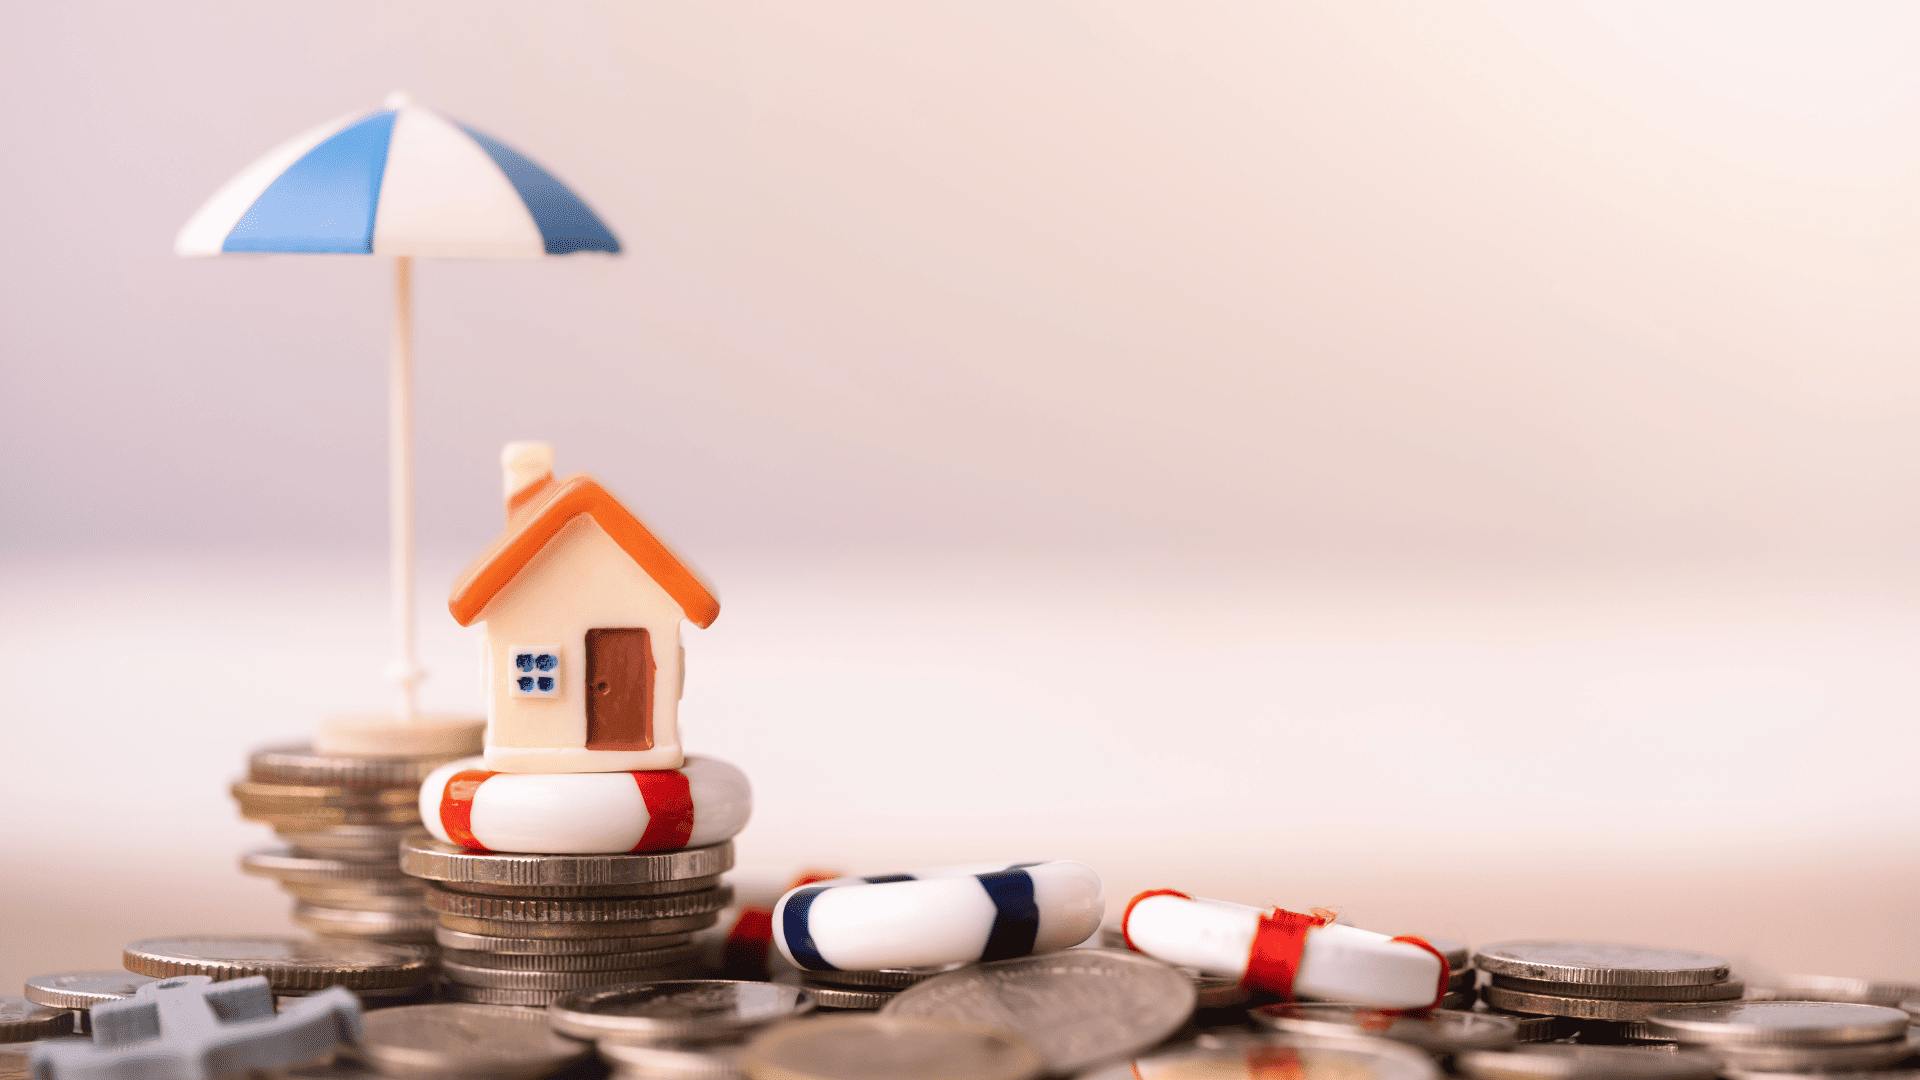 Home Warranty vs. Home Insurance